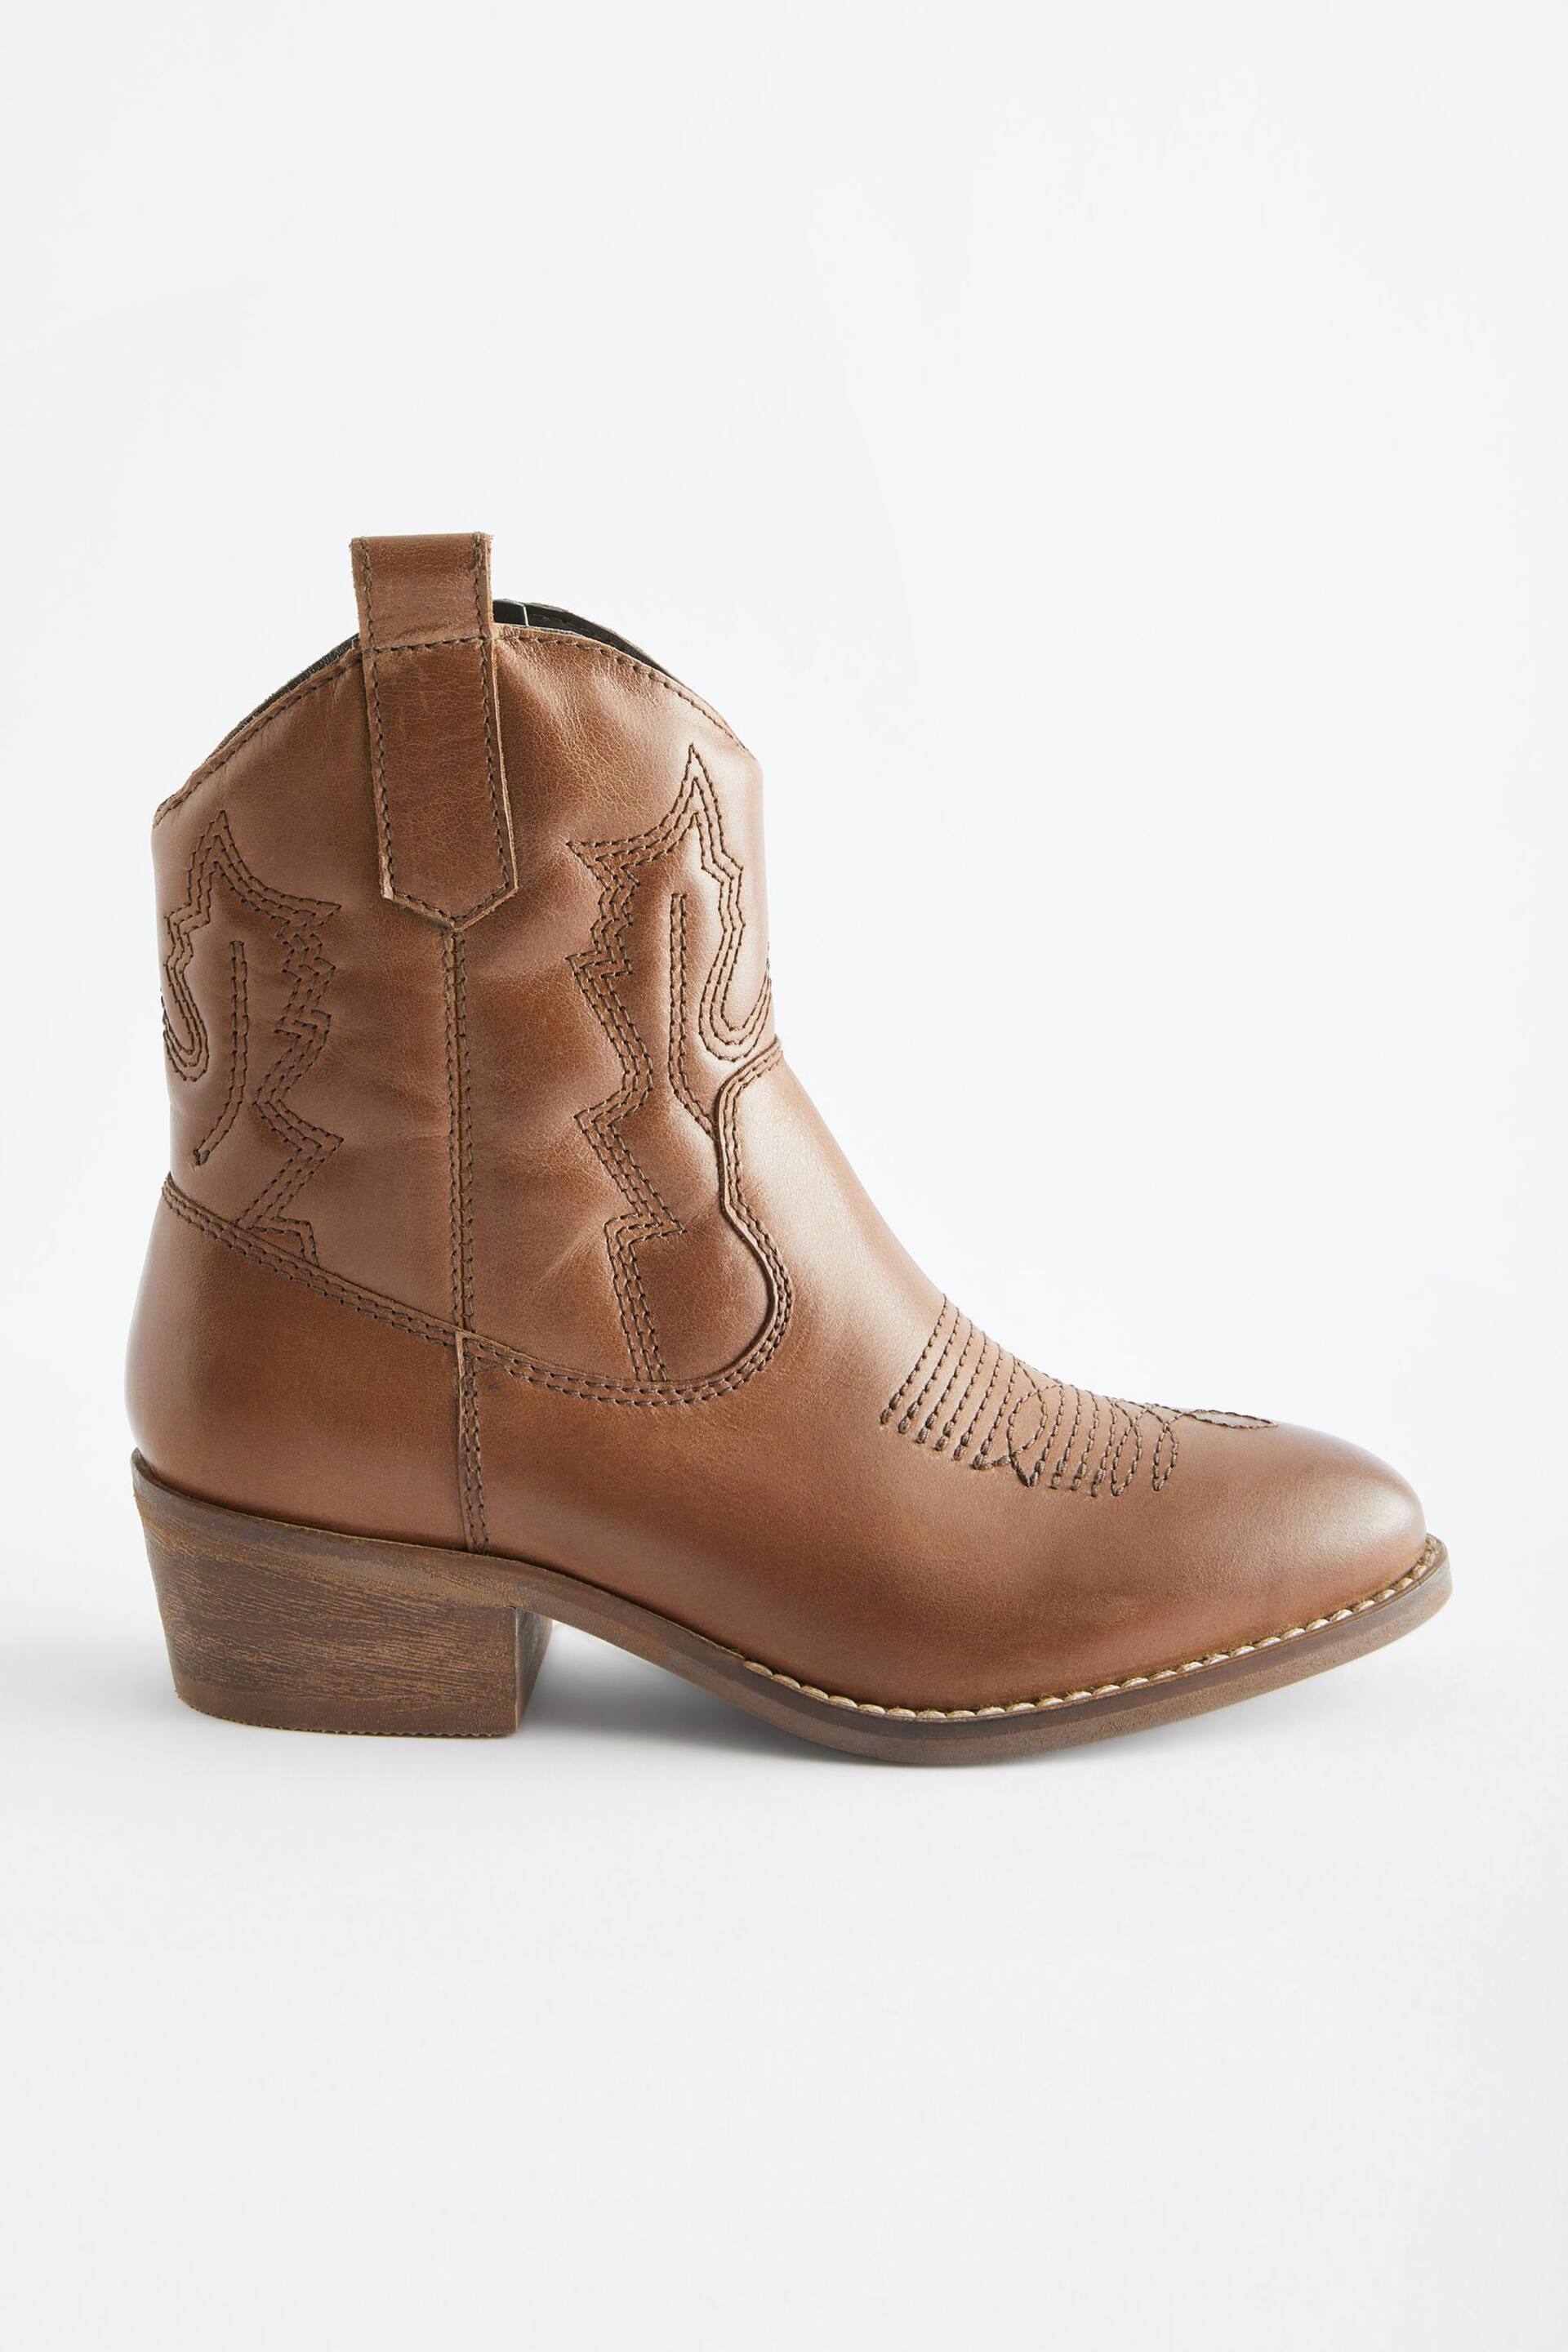 Tan Brown Western Heel Boots - Image 2 of 5